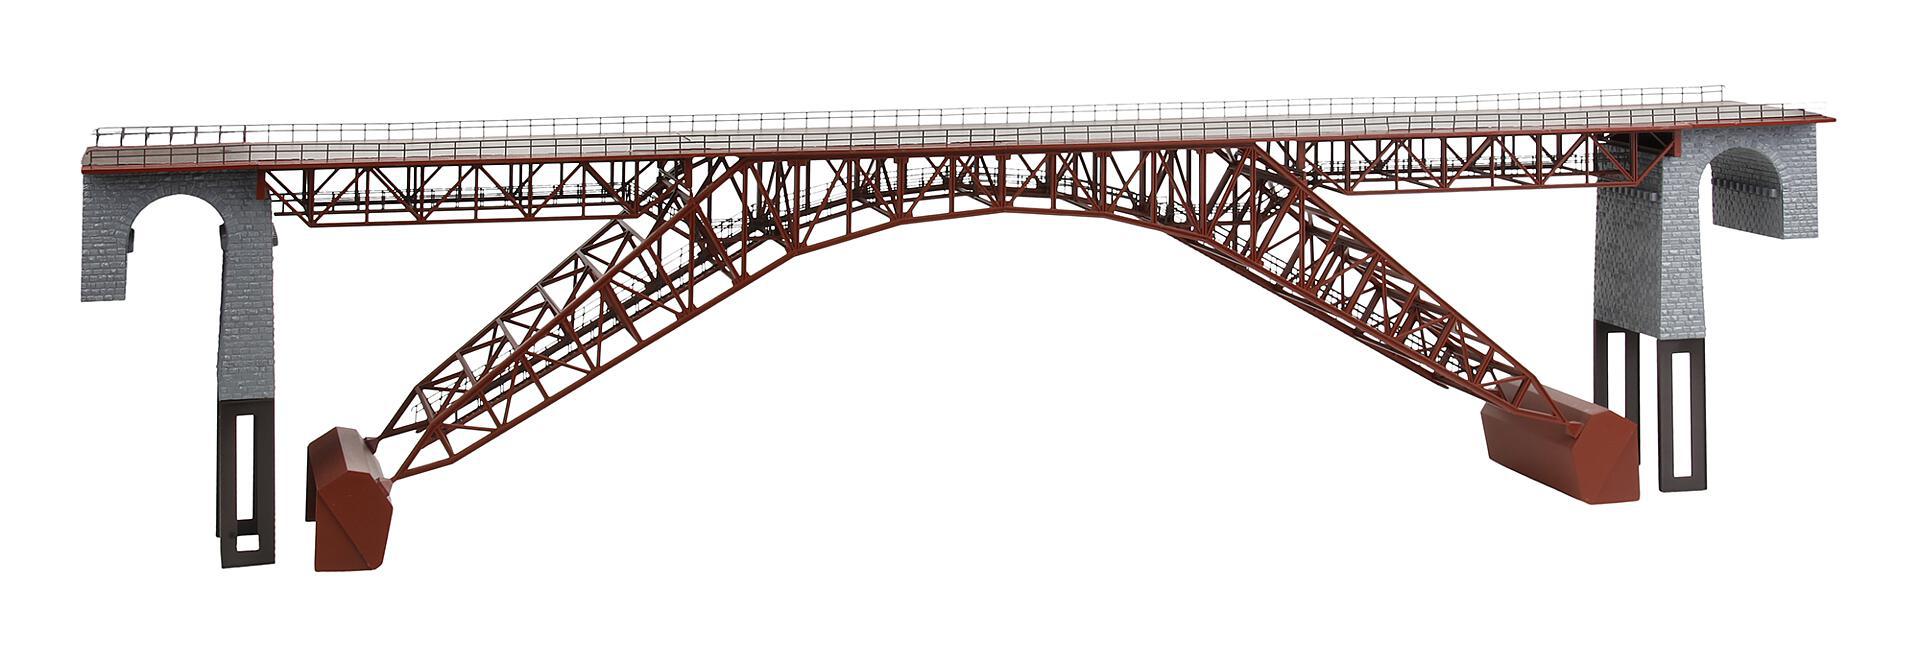 faller-191776-Eisenbahn-Stahlbrücke